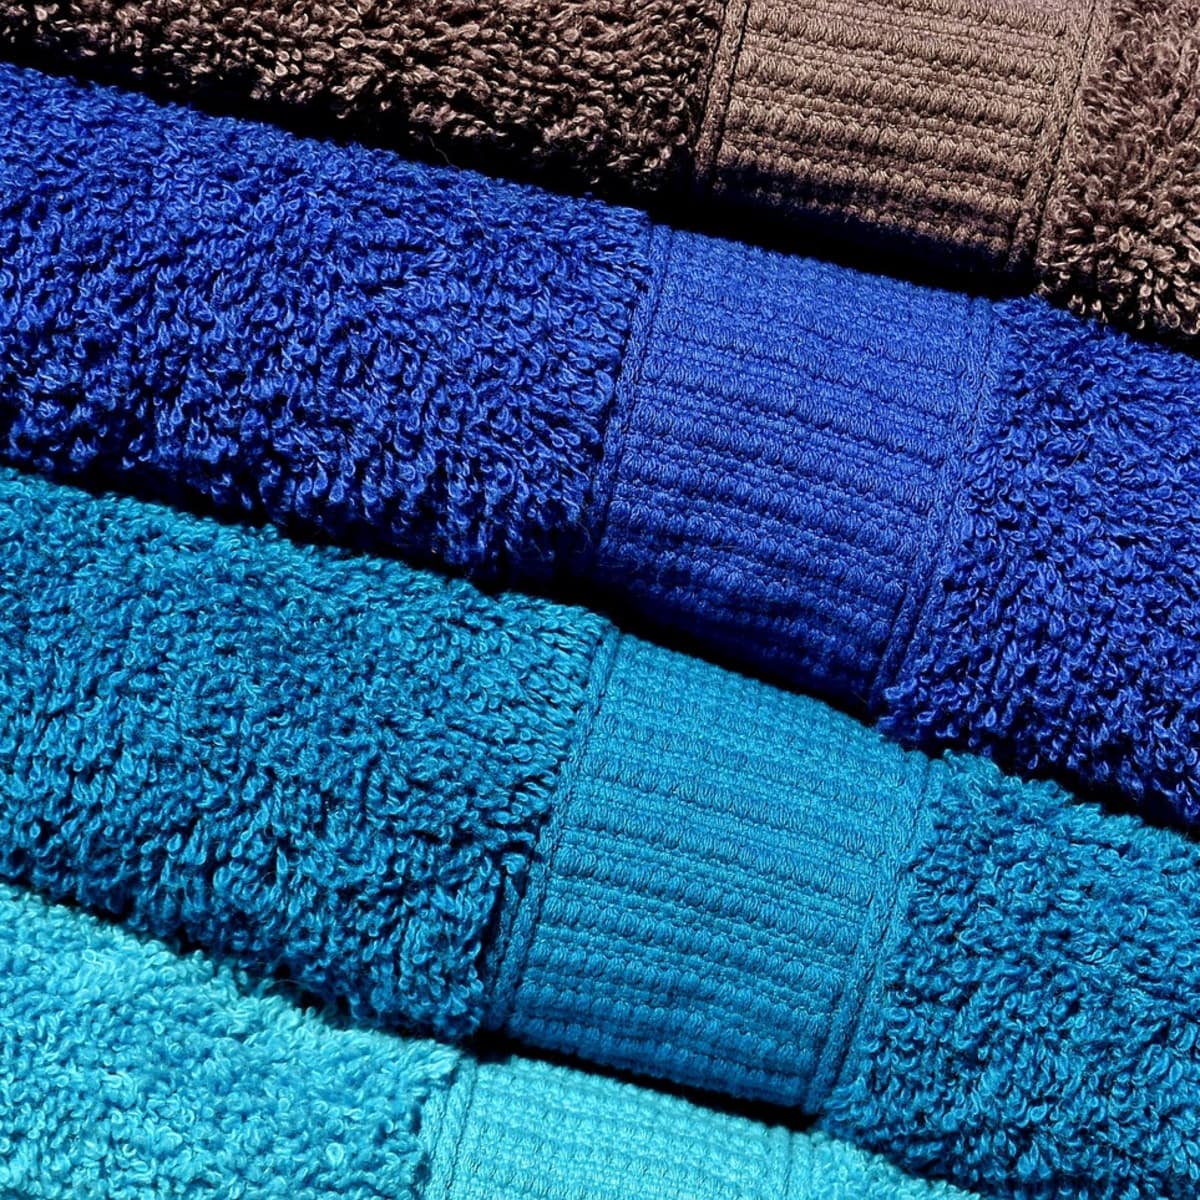 How Hotels Keep Towels White: Tips and Tricks - Creative Homemaking